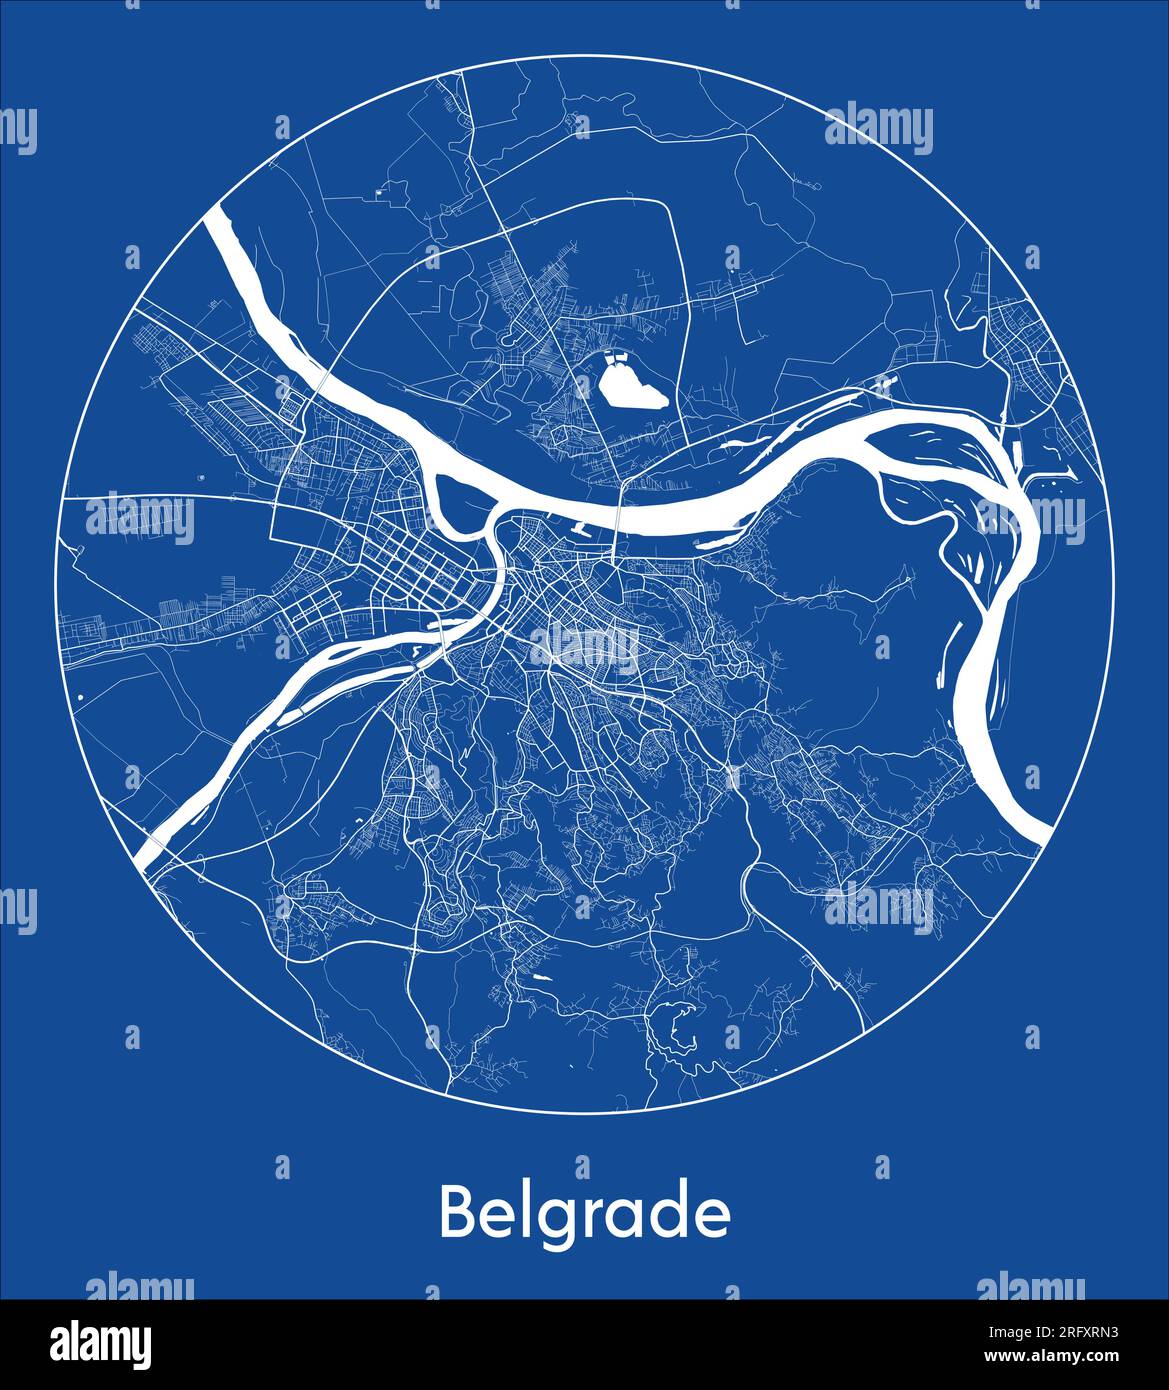 City Map Belgrade Serbia Europe blue print round Circle vector illustration Stock Vector